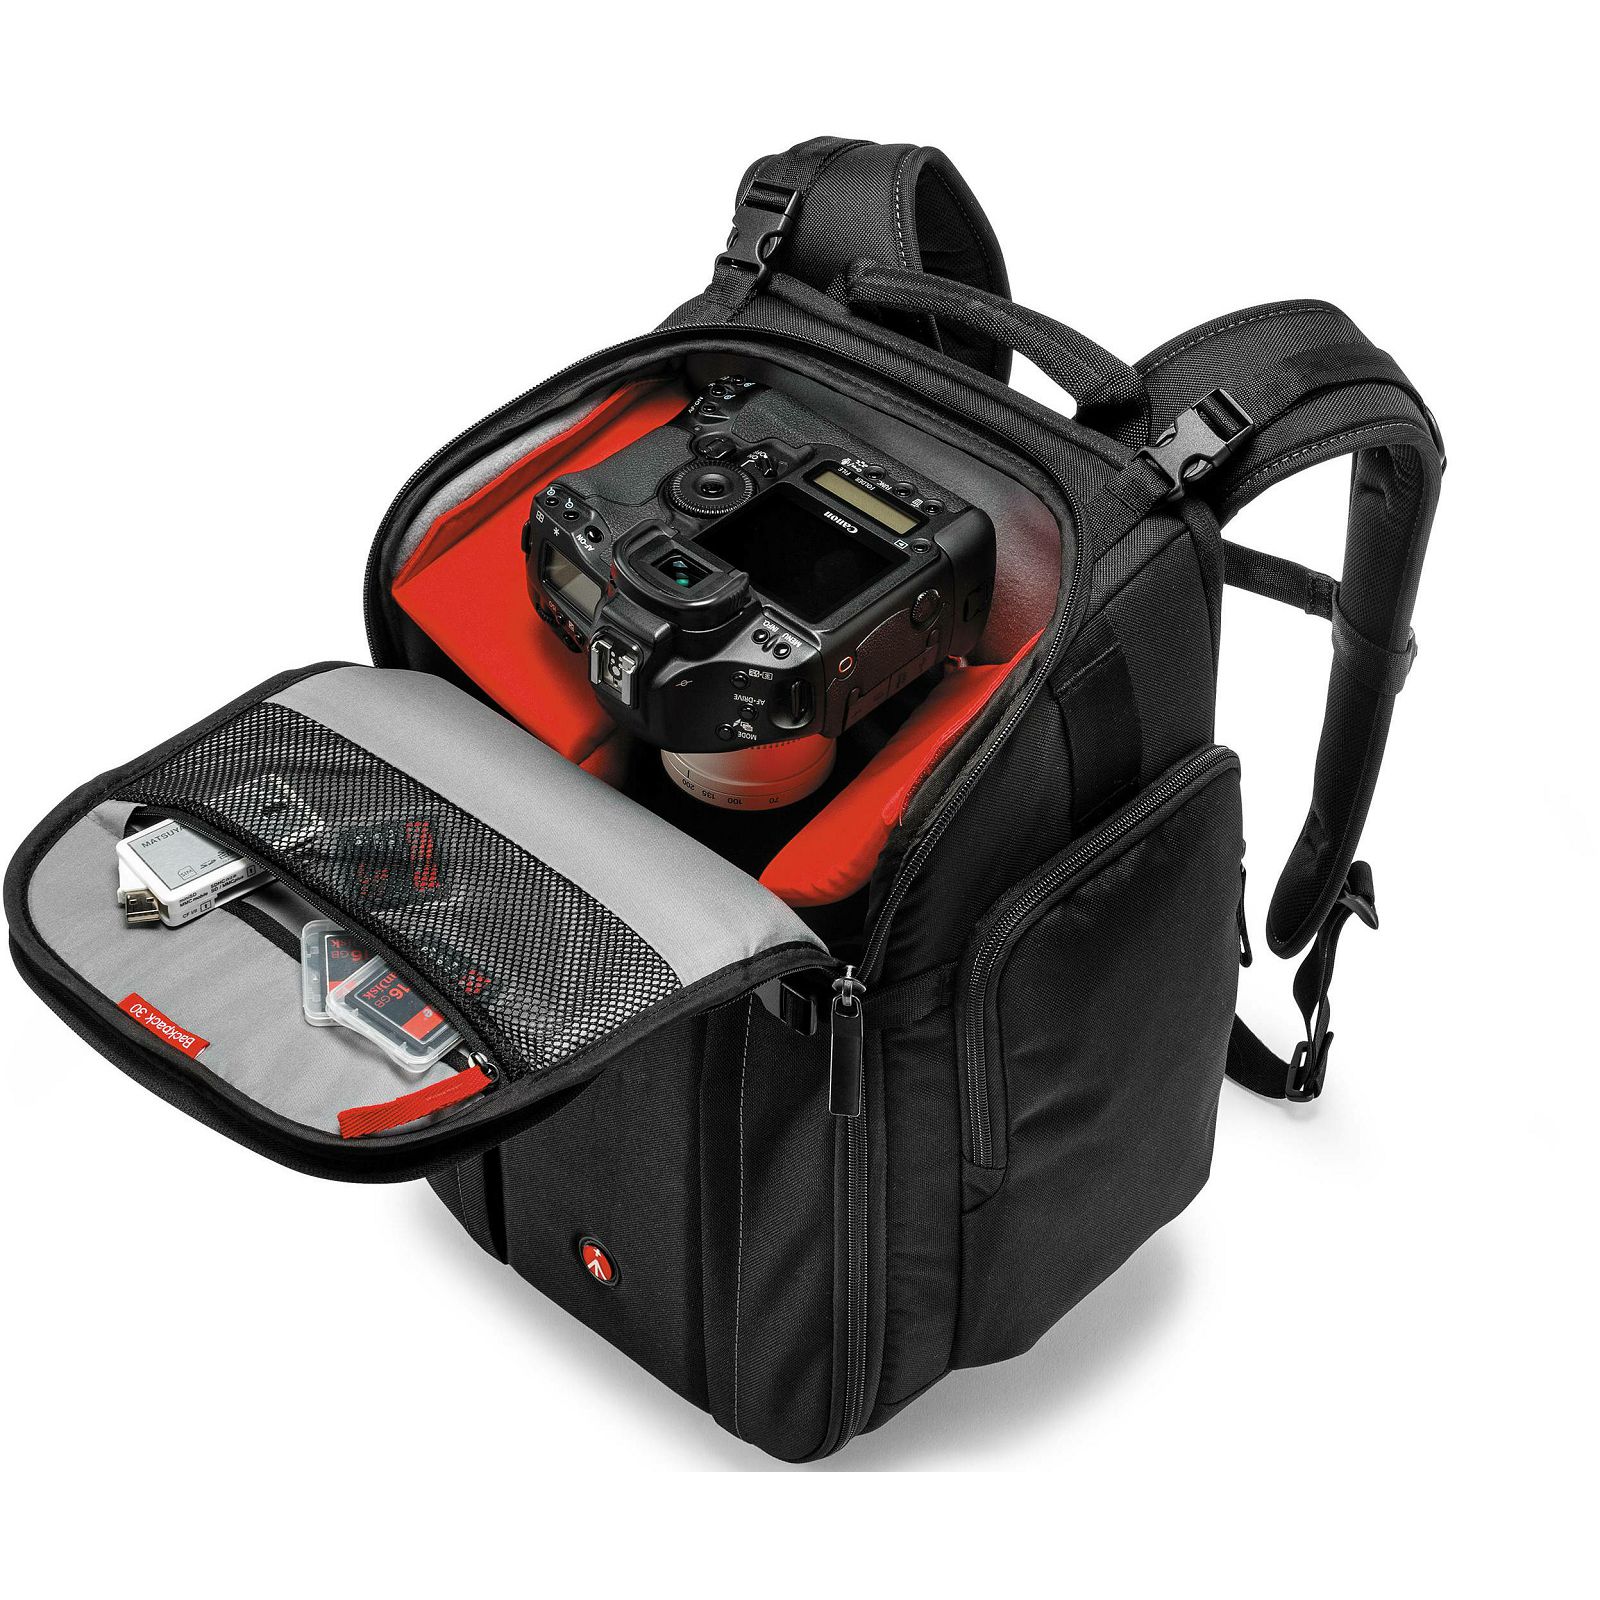 Manfrotto Backpack 50 Pro MB Professional ruksak za fotoaparate i foto opremu (MB MP-BP-50BB)